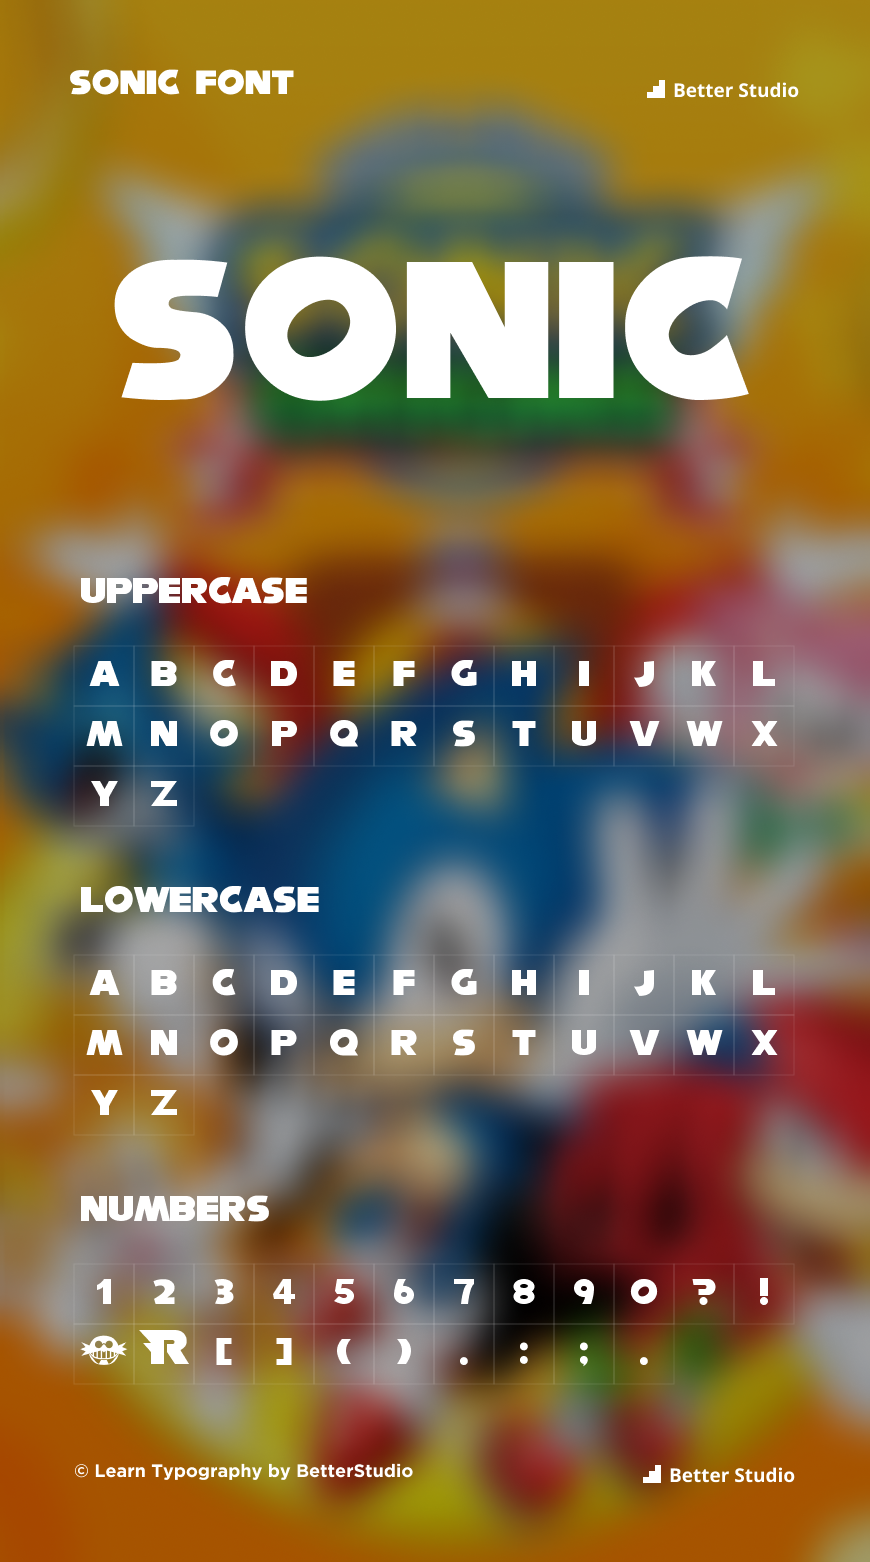 sonic logo font  Sonic, ? logo, Sonic party